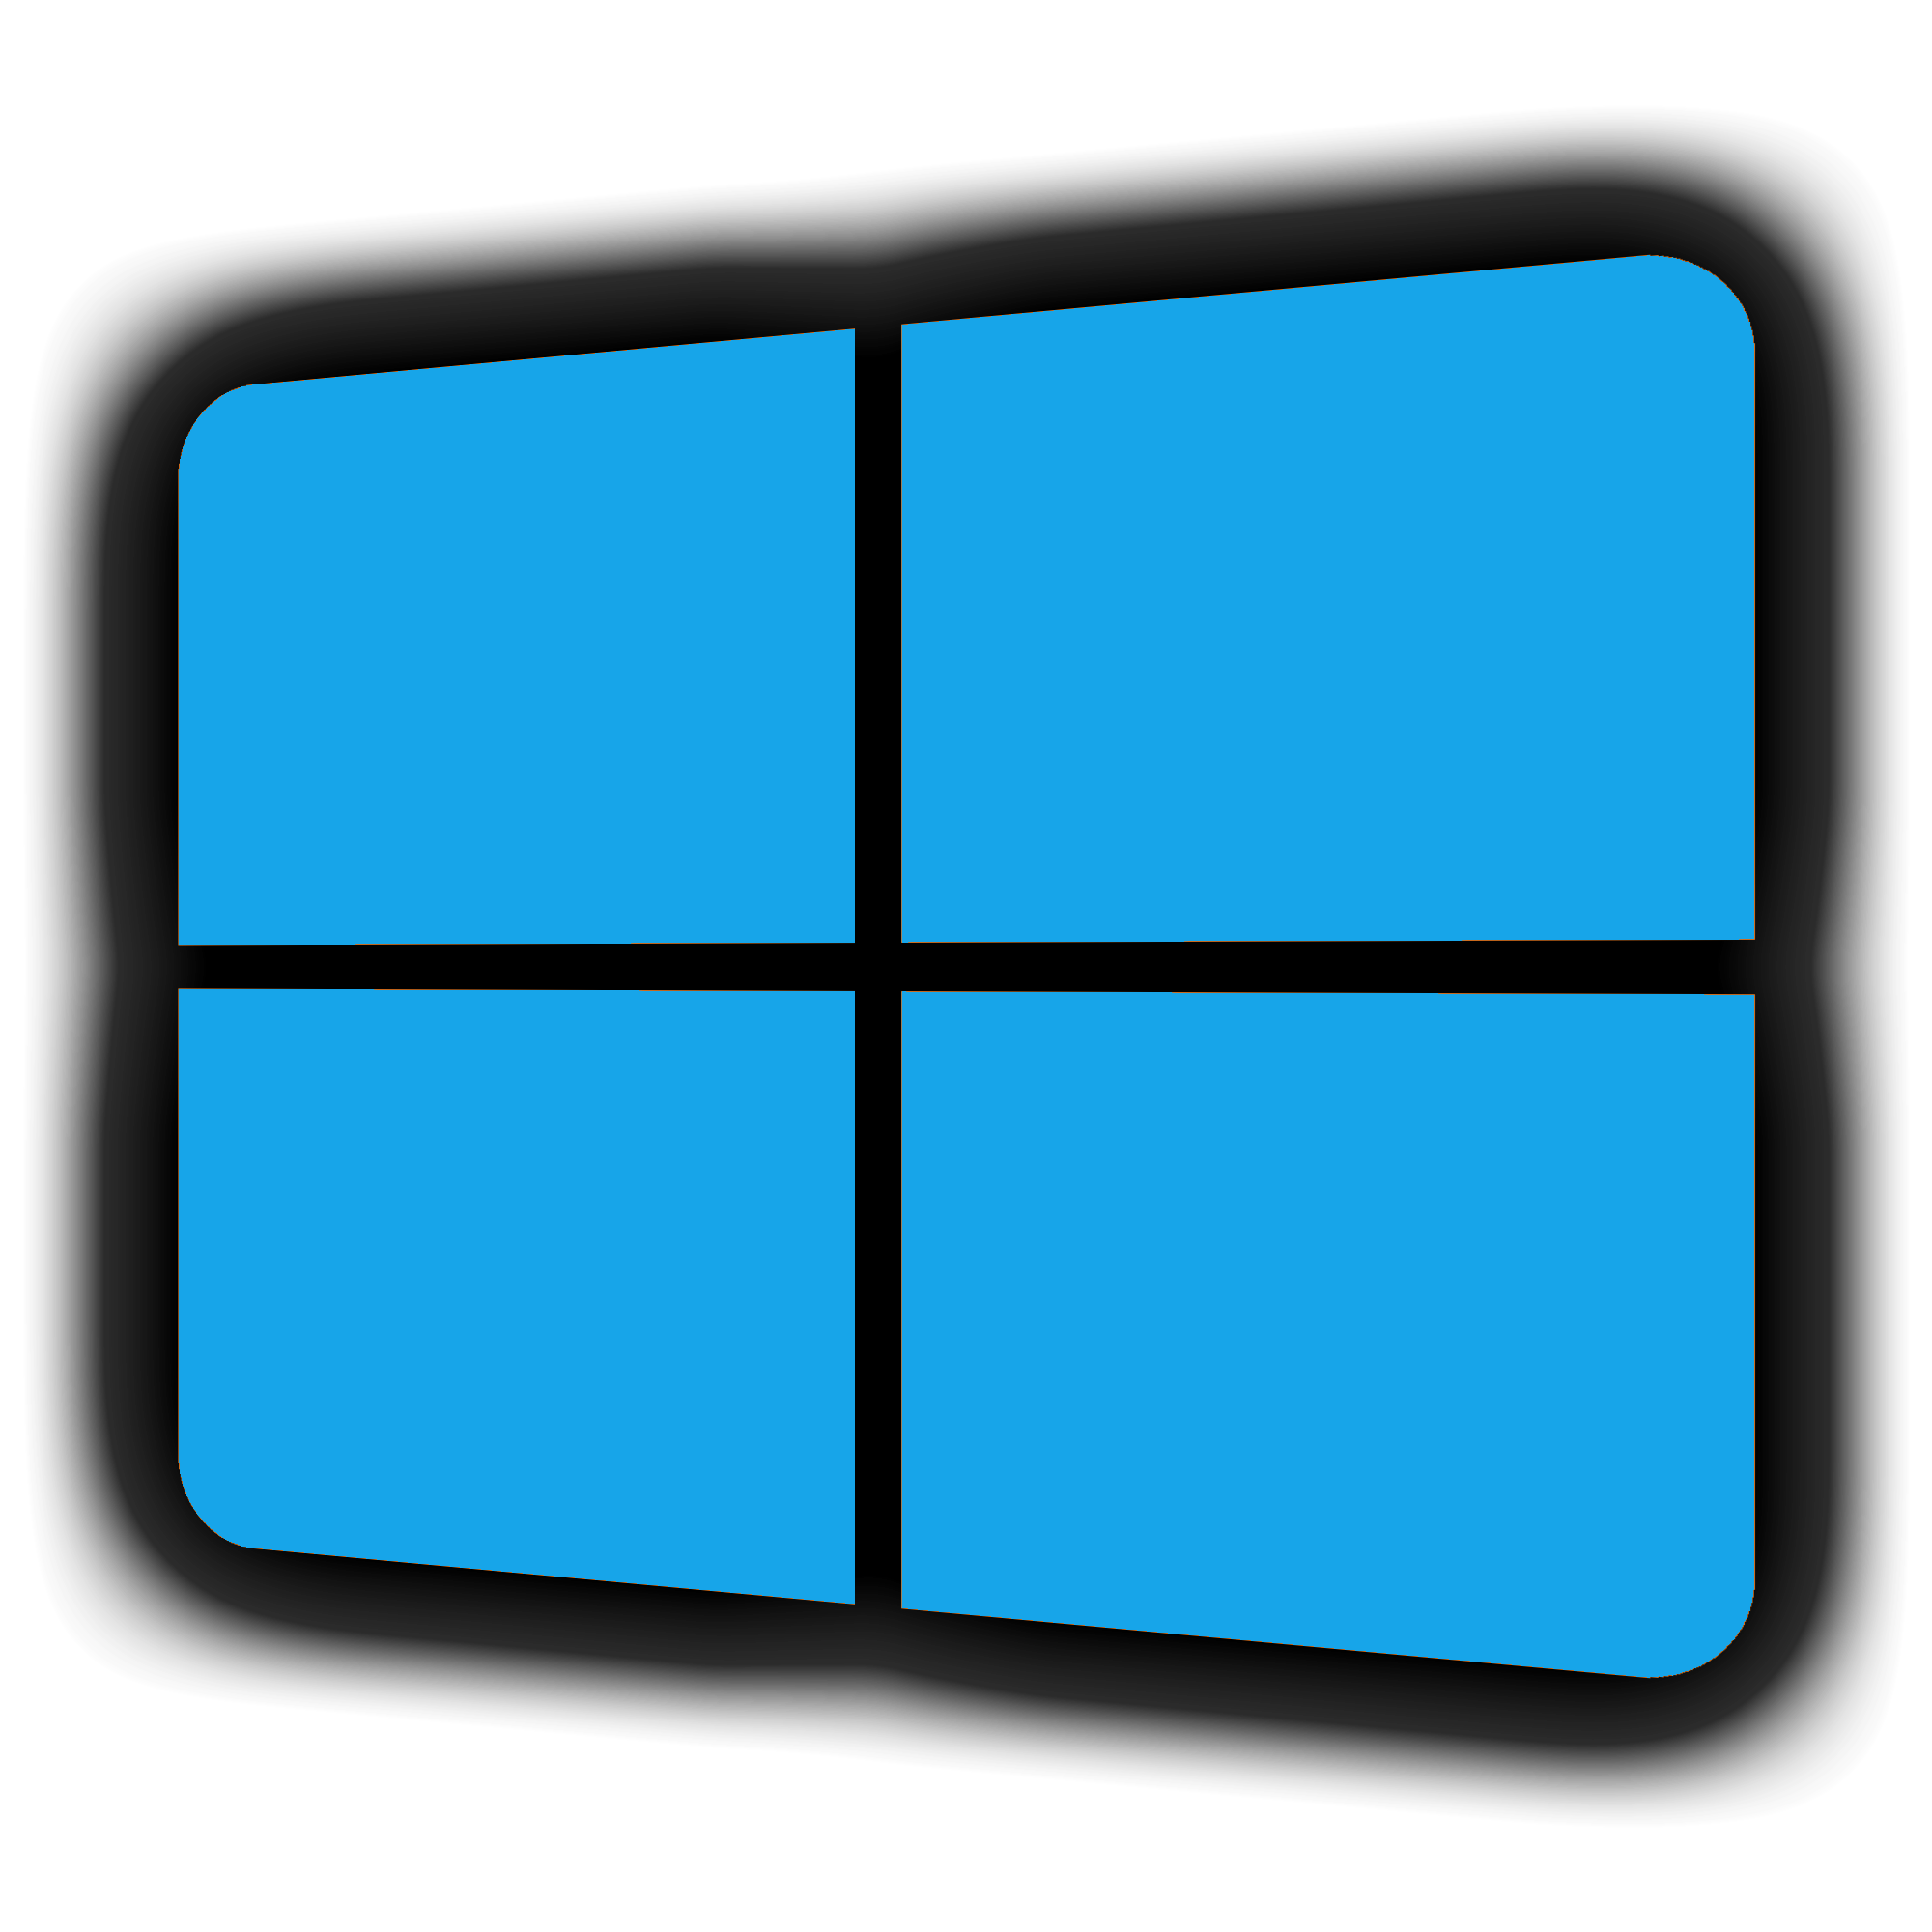 Logo De Windows 11 File Windows 10x Icon Png Wikimedia Commons Images ...